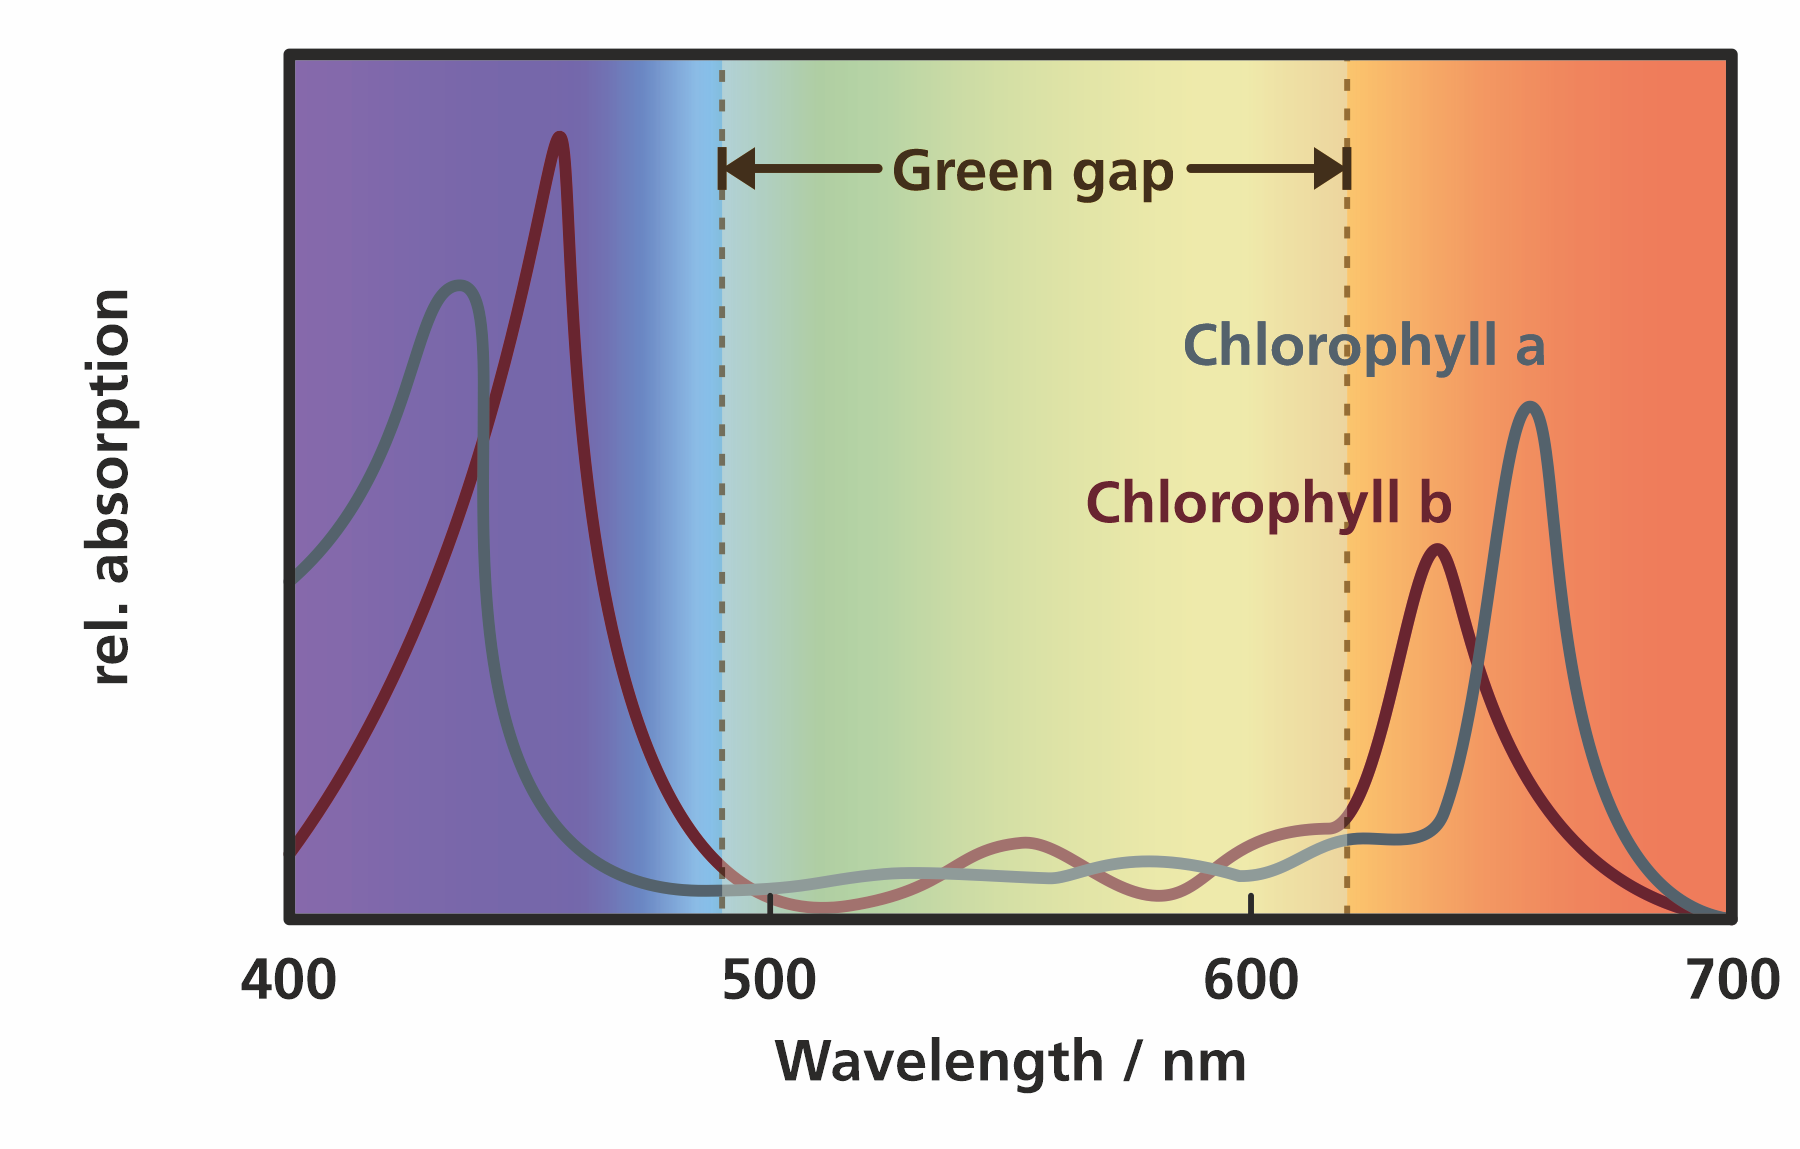 Green gap: Absorption spectrum of chlorophyll